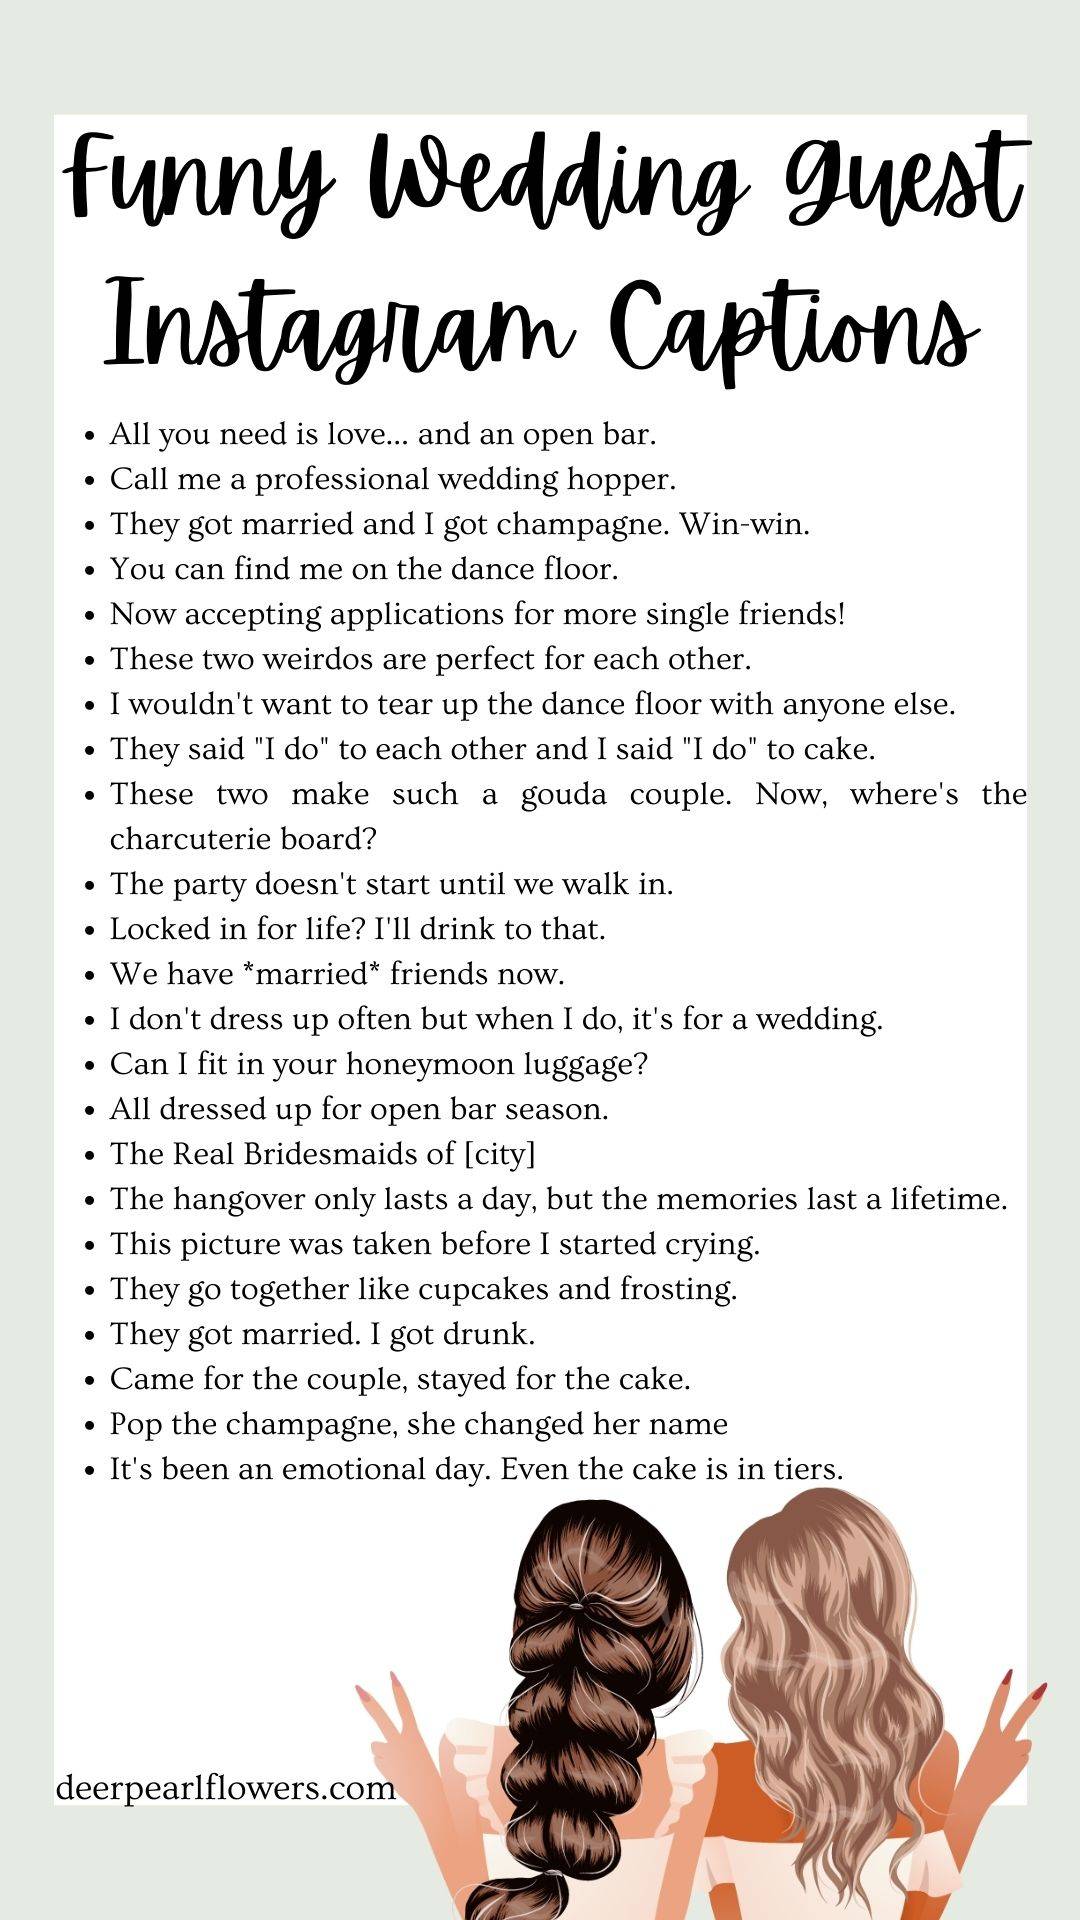 Funny Wedding Guest Instagram Captions